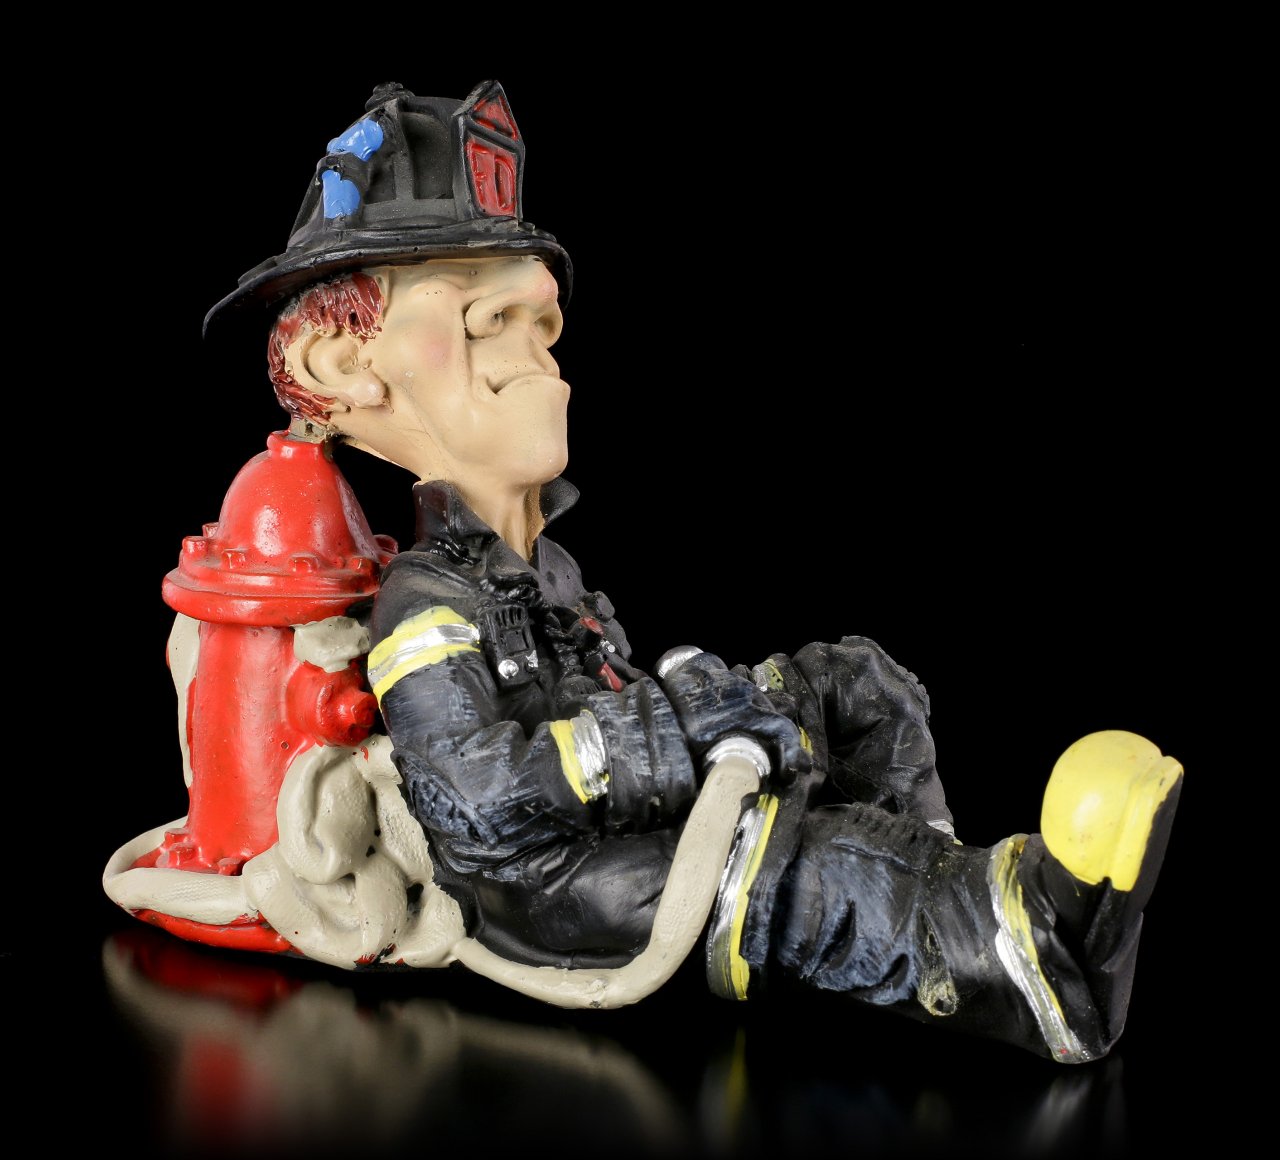 Funny Job Figurine - Firefighter is Sleeping